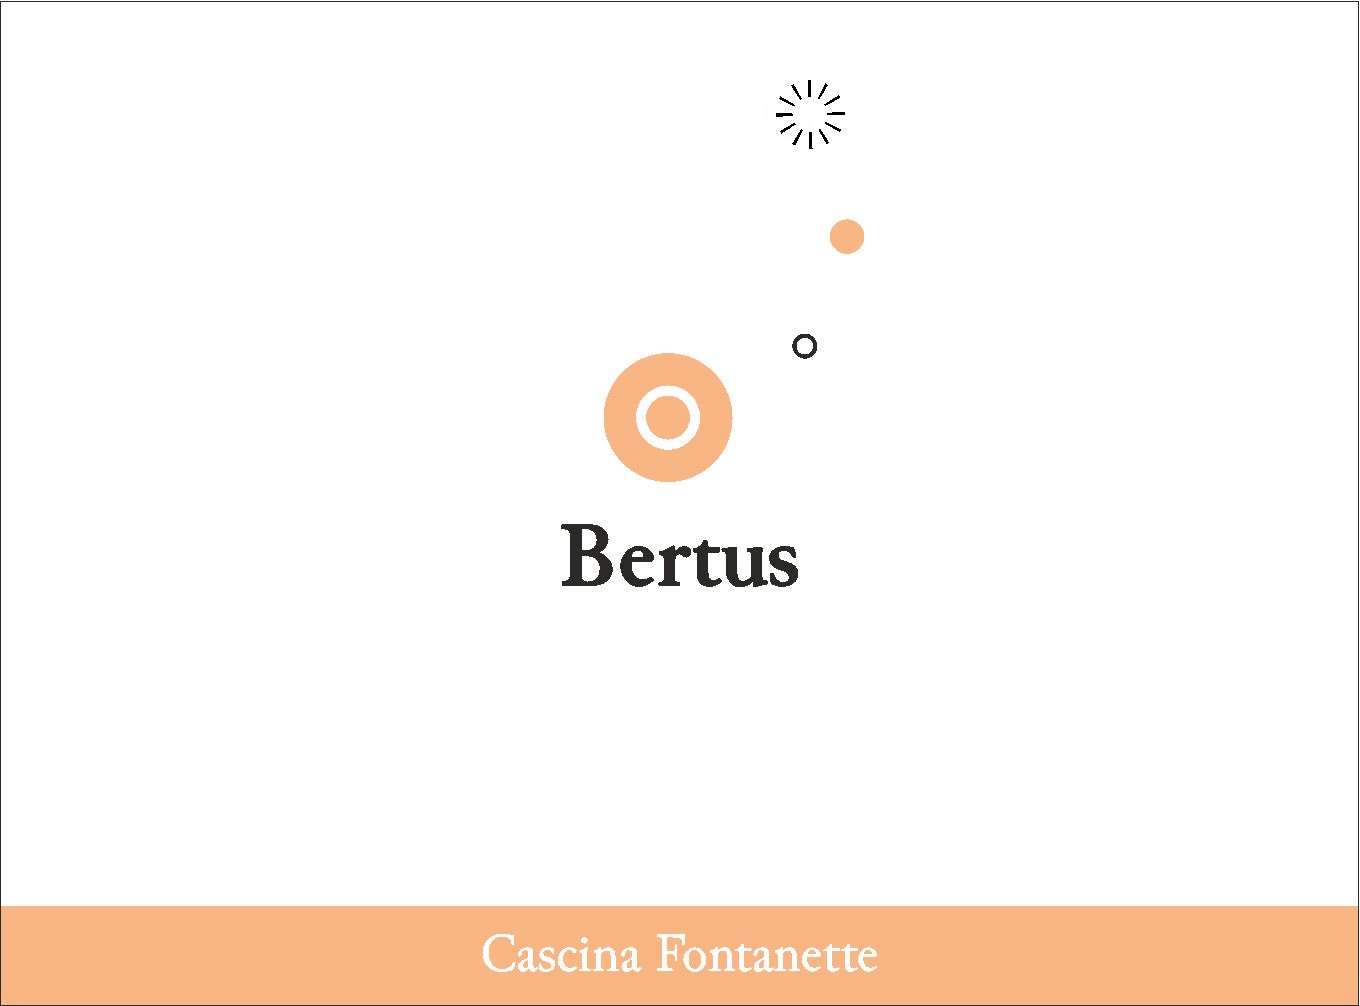 Vino bianco Bertus - Cascina Fontanette (label)